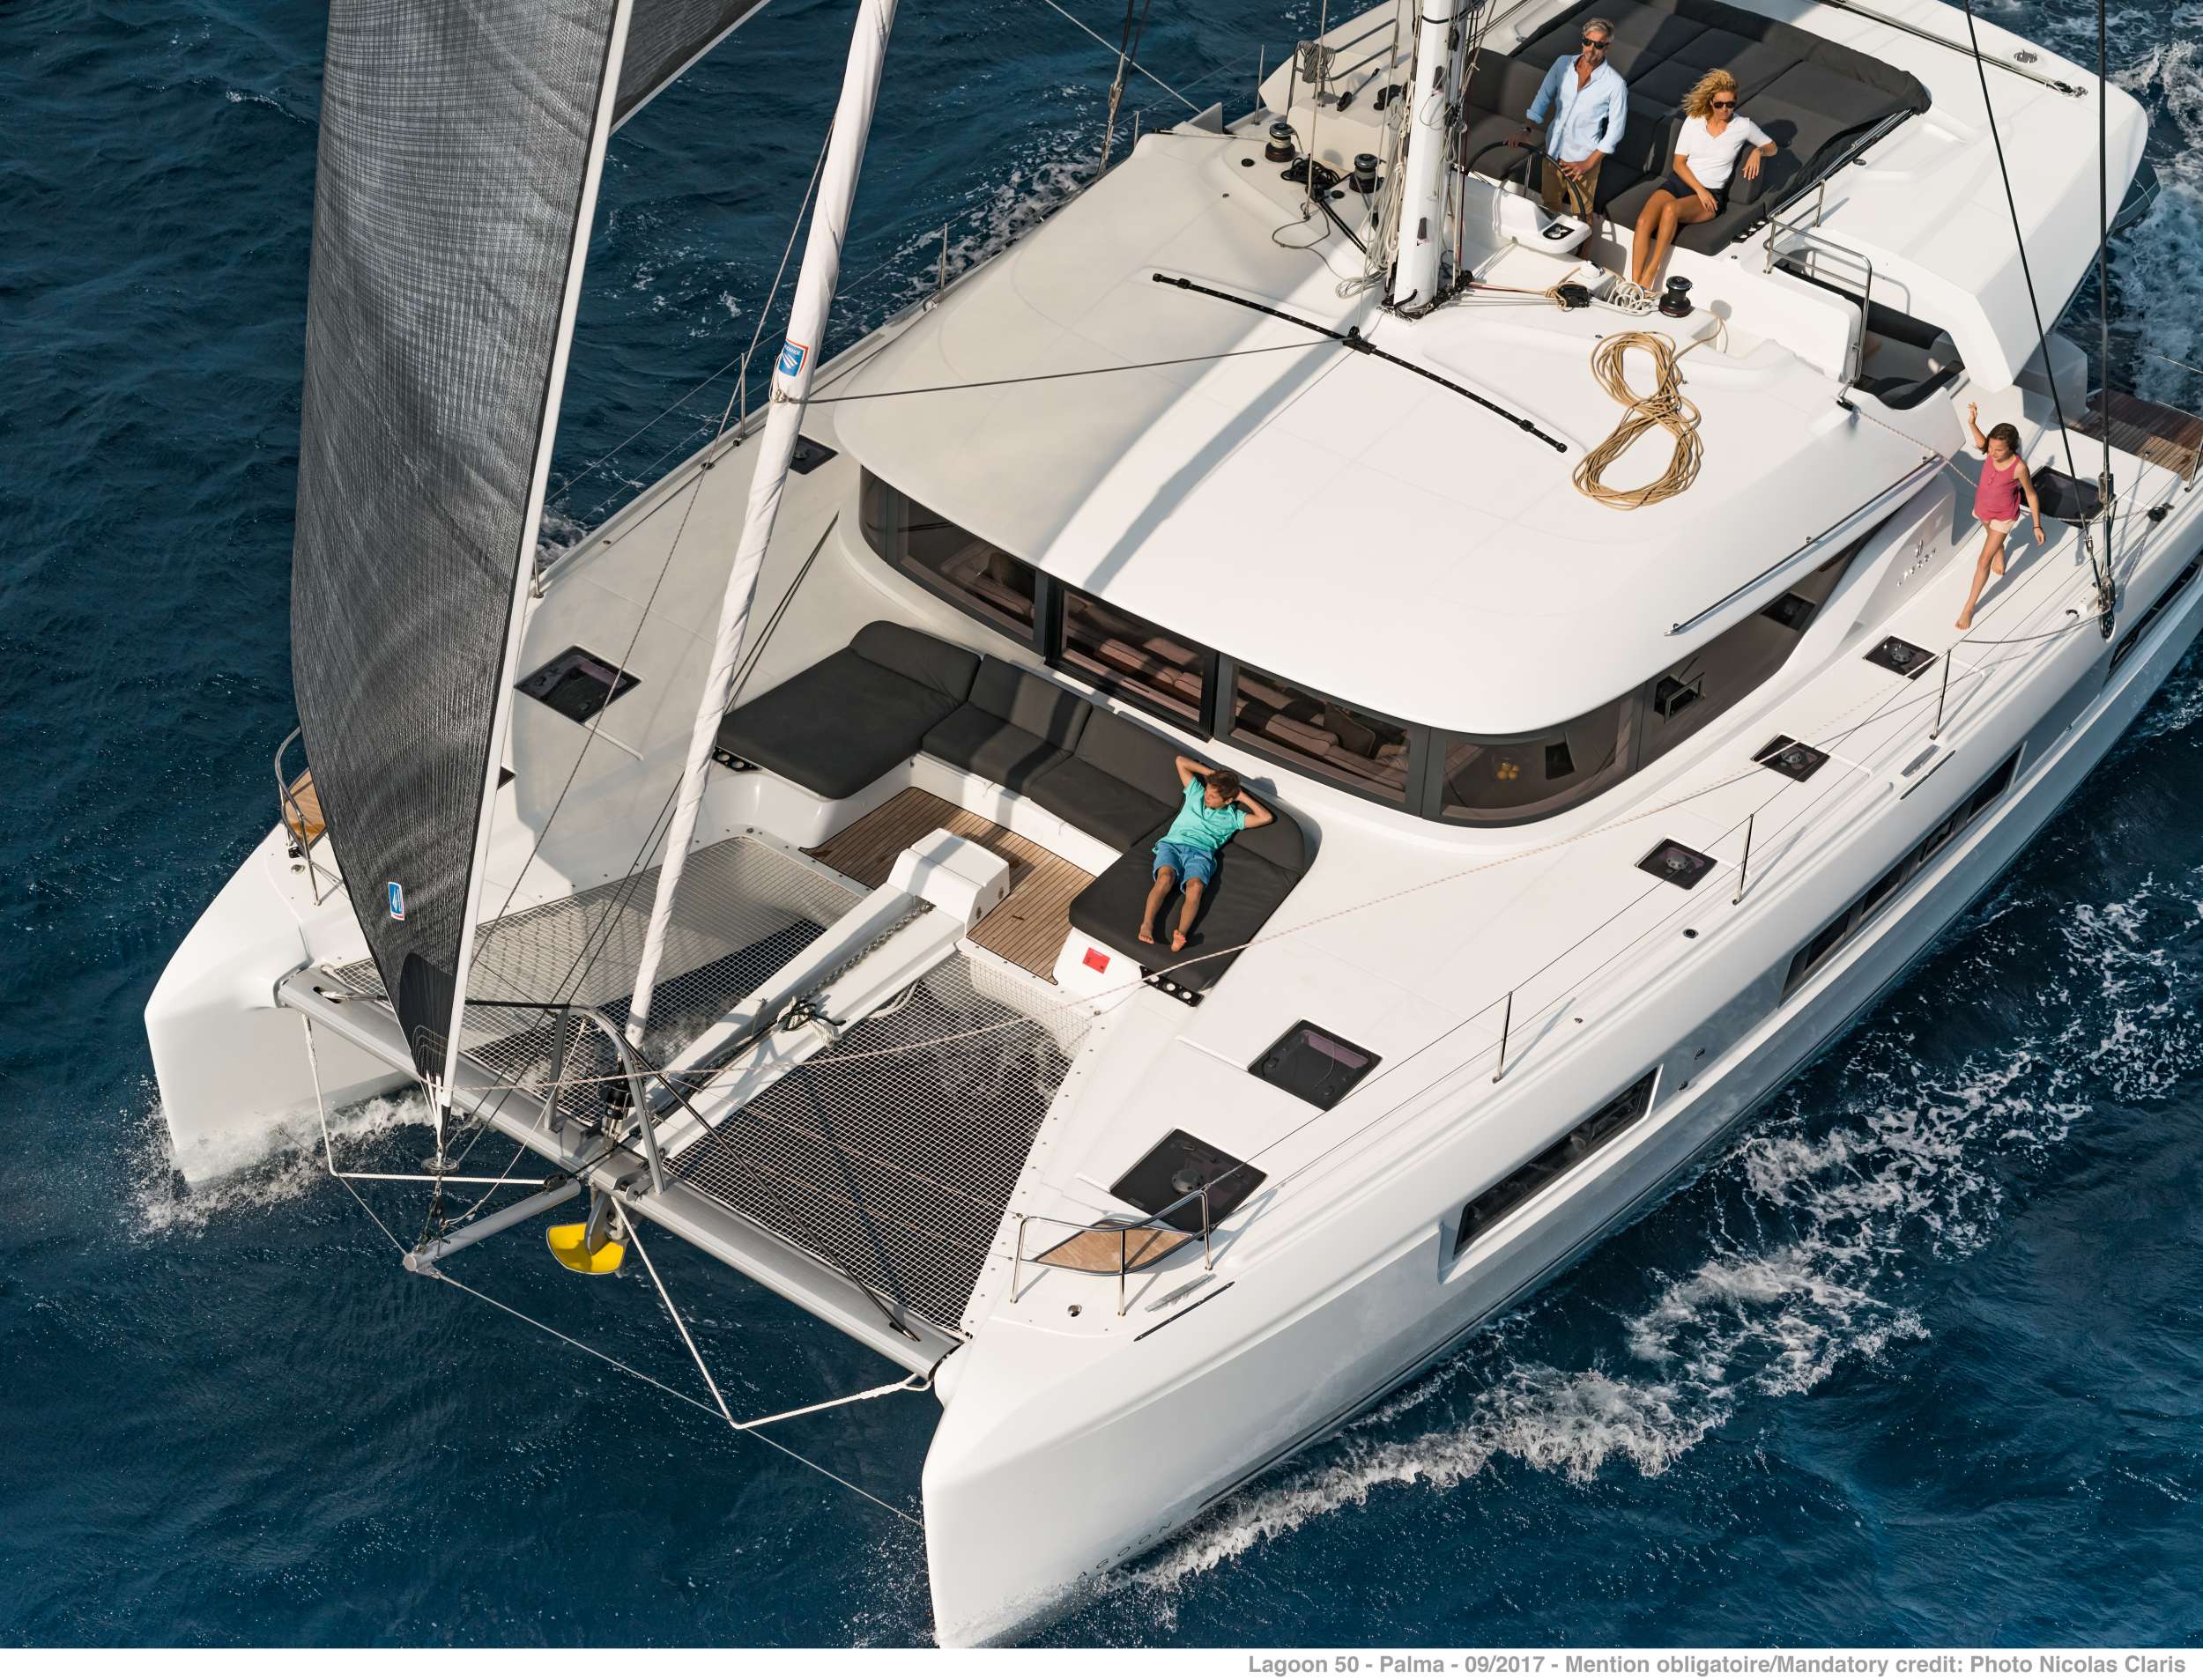 ONEIDA 2 - Yacht Charter Paros & Boat hire in Greece 6